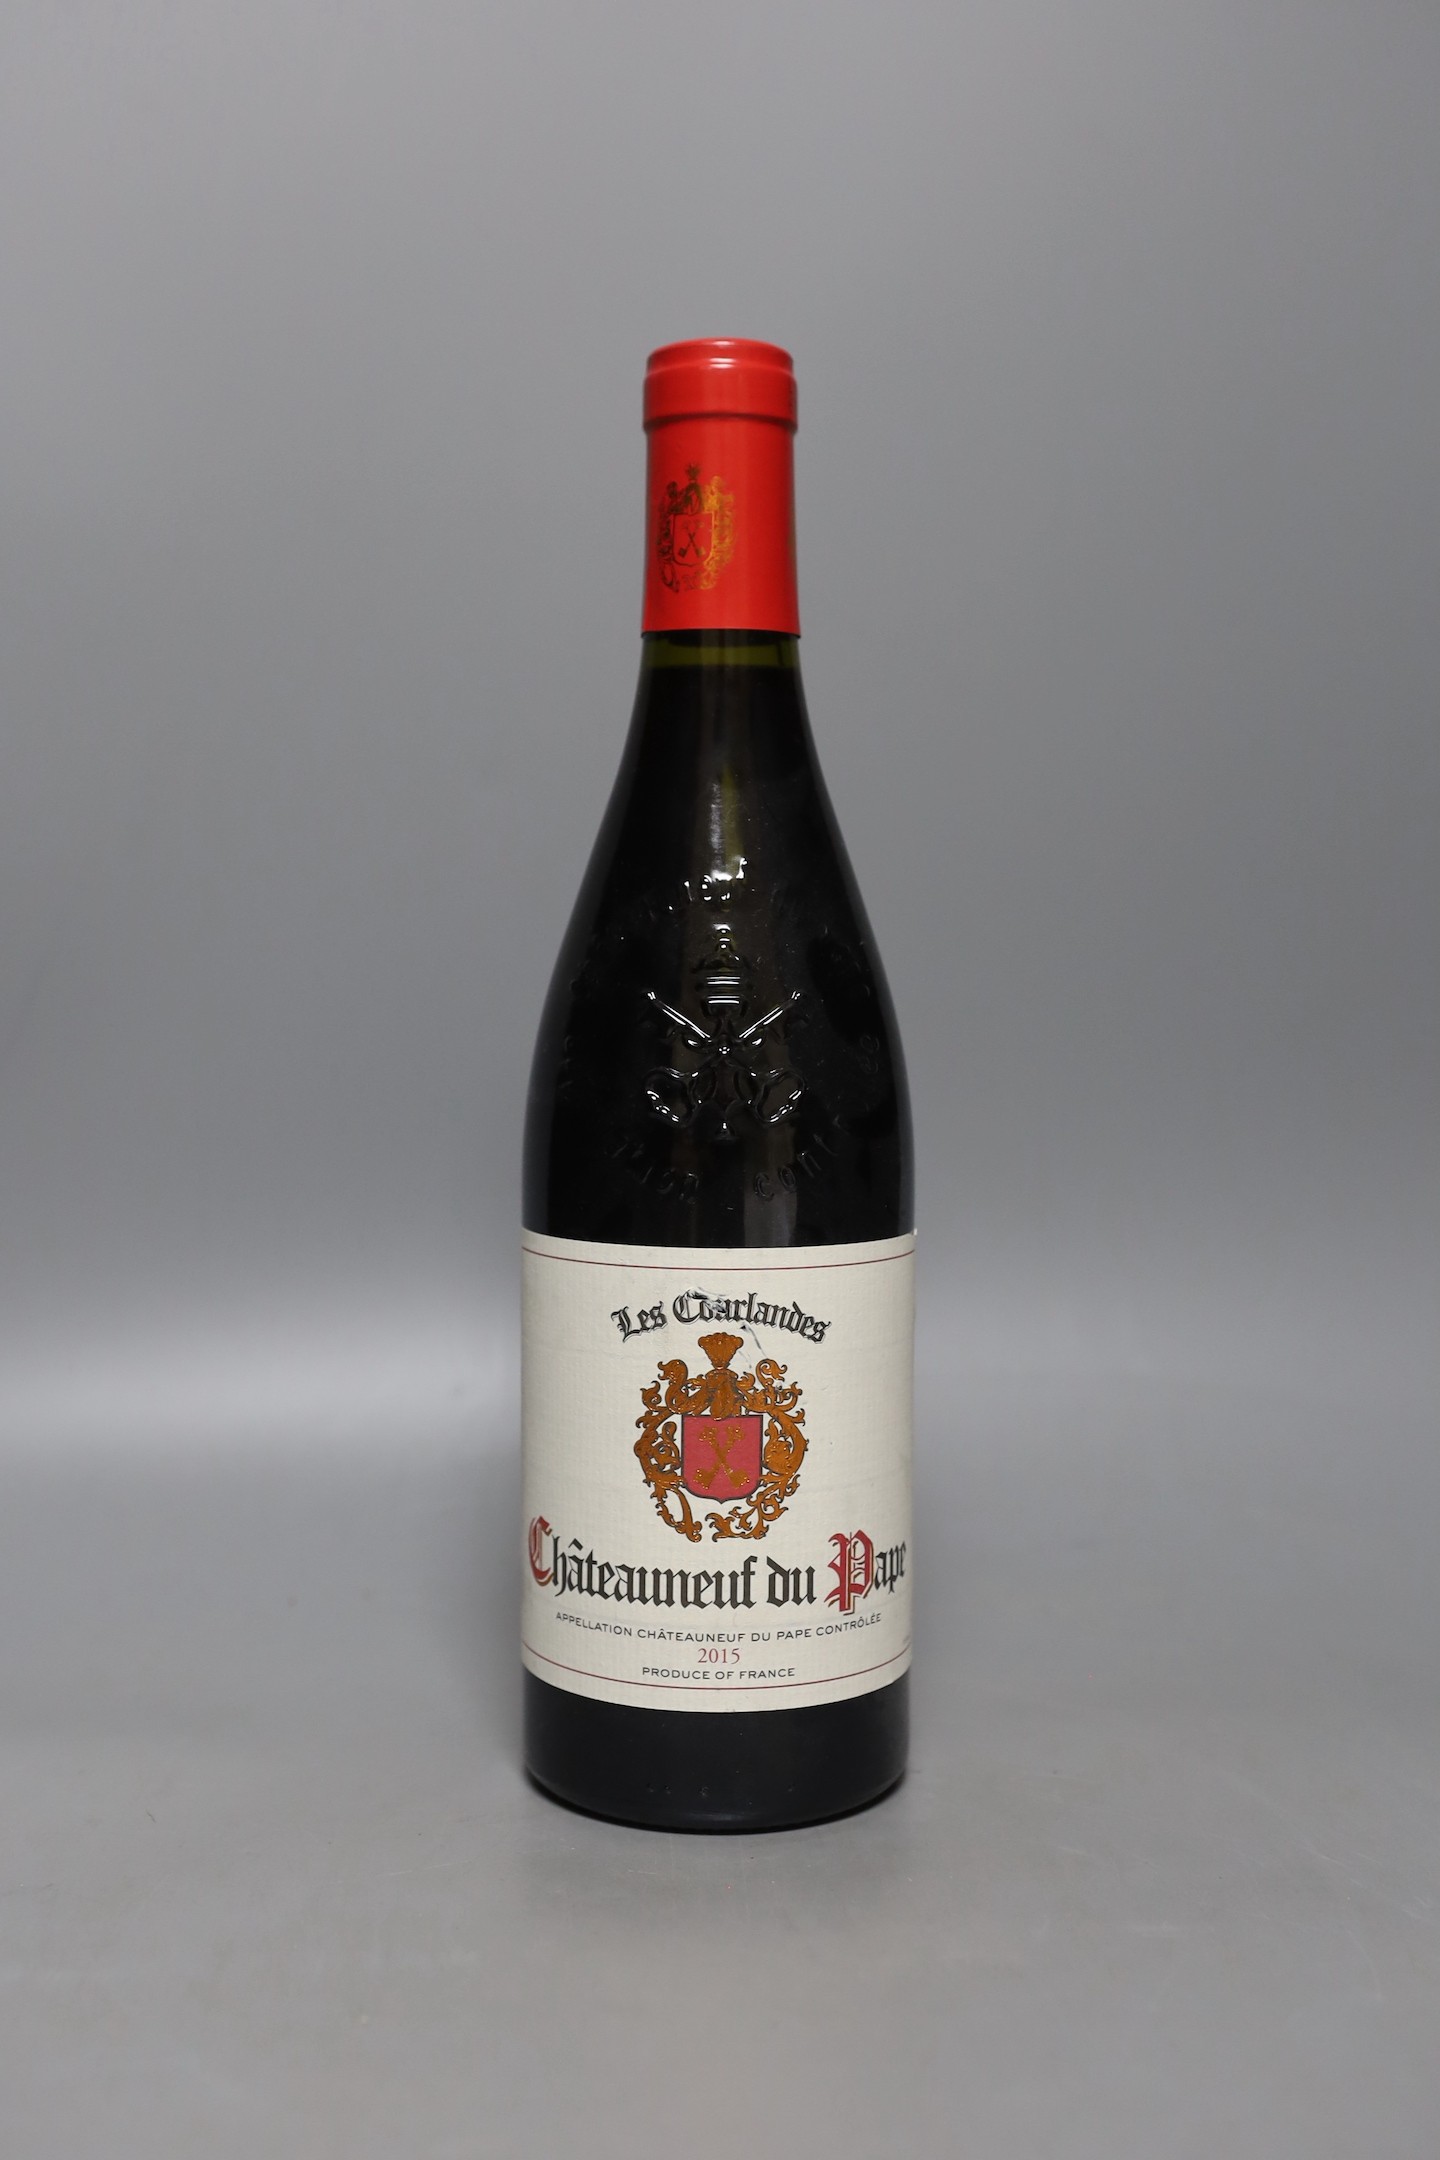 Eleven bottles of Chateauneuf-du-Pape